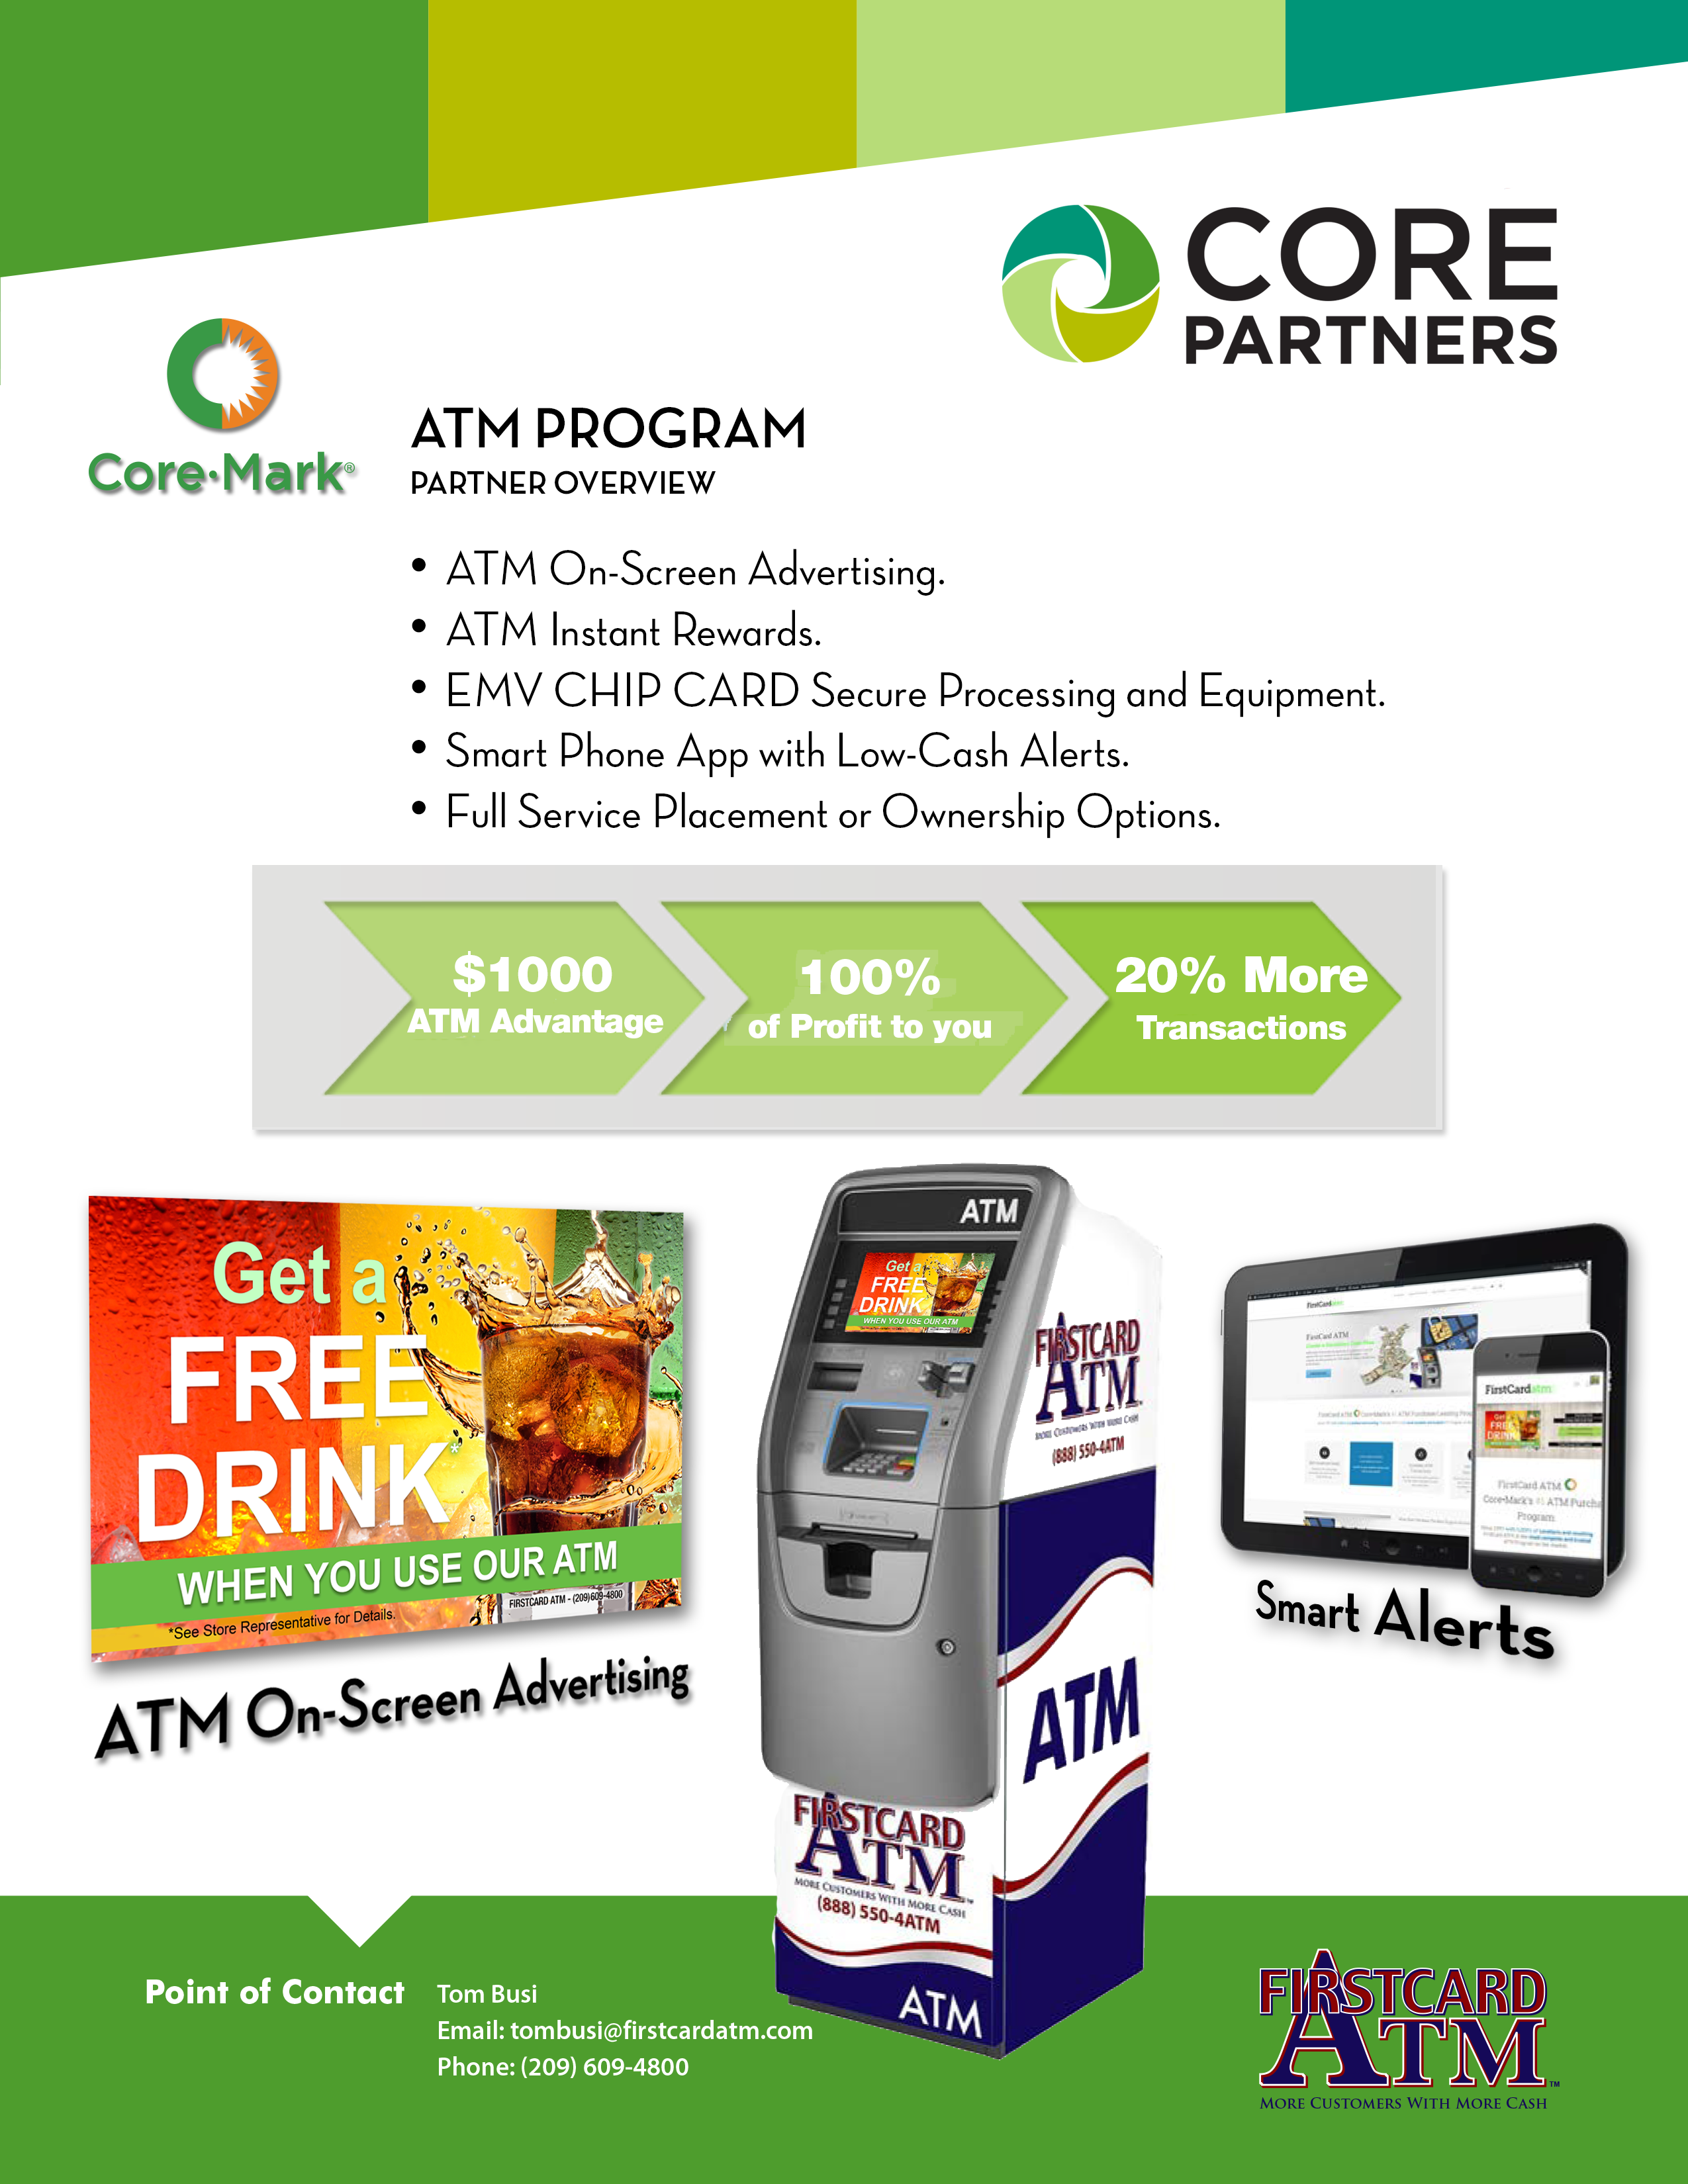 FirstCard Core Partners